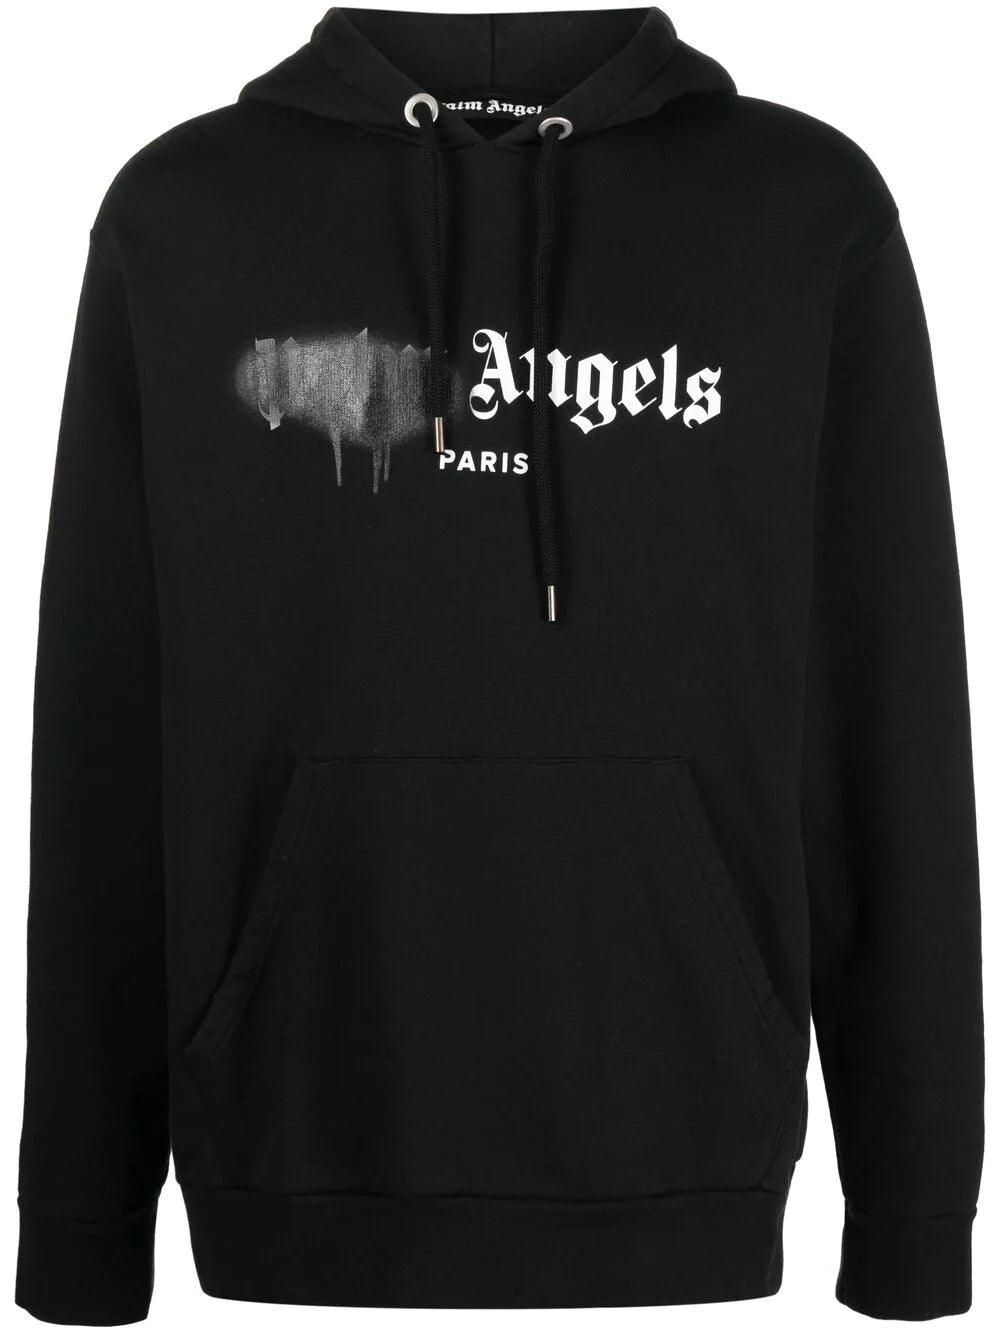 New York Sprayed hoodie, Palm Angels